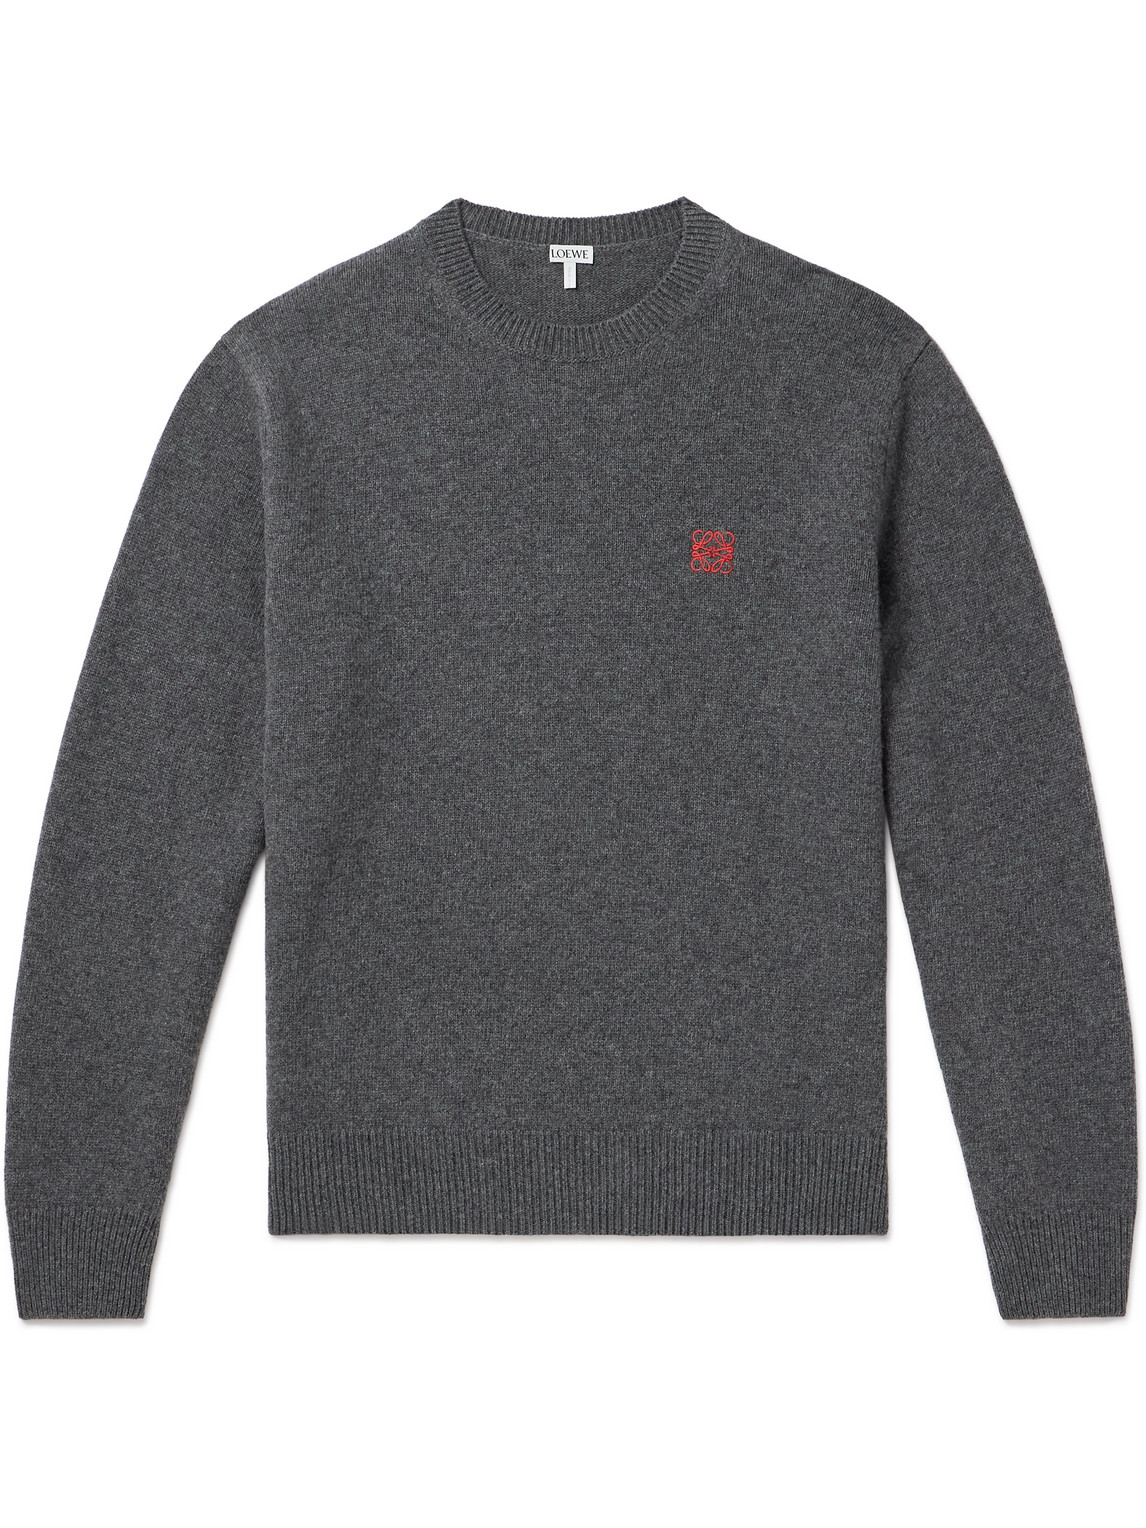 LOEWE - Anagram Logo-Embroidered Wool Sweater - Men - Gray - XS von LOEWE